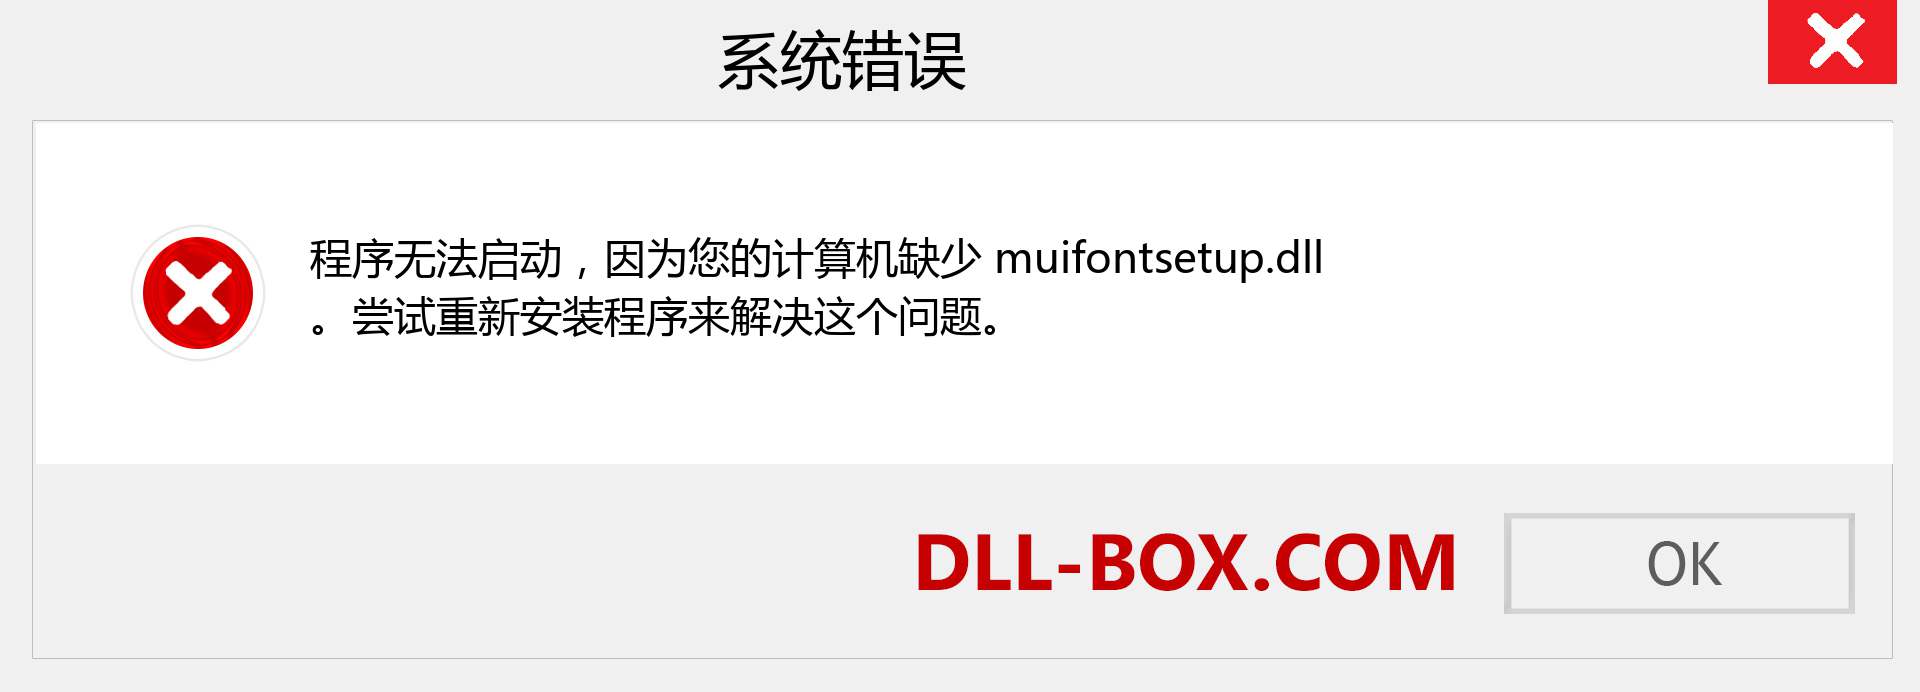 muifontsetup.dll 文件丢失？。 适用于 Windows 7、8、10 的下载 - 修复 Windows、照片、图像上的 muifontsetup dll 丢失错误